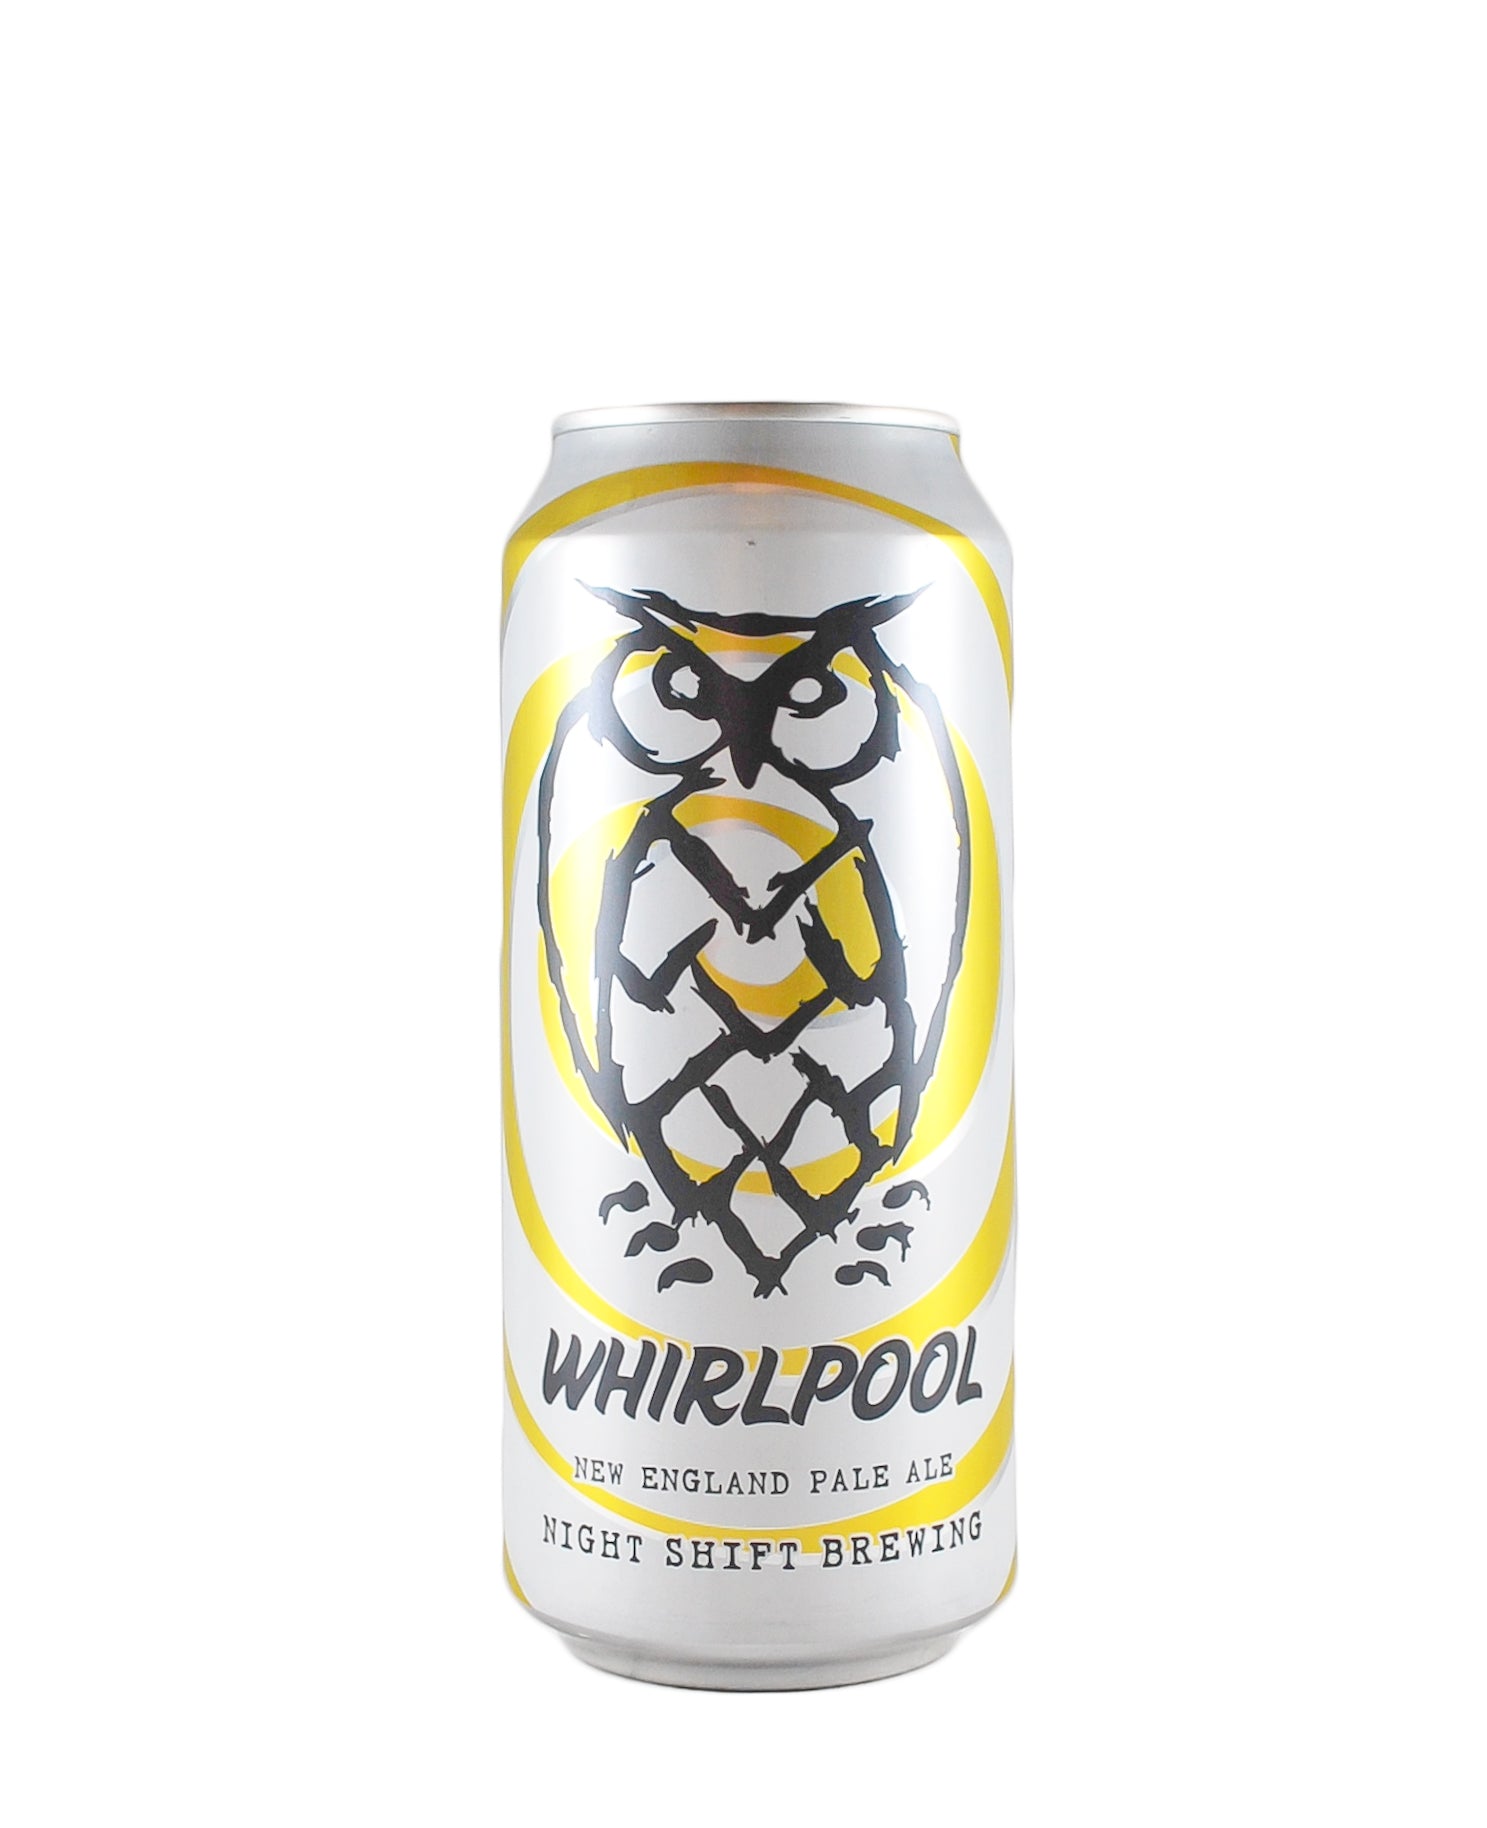 Night Shift Brewing "Whirlpool" American Pale Ale (Everett, MA)